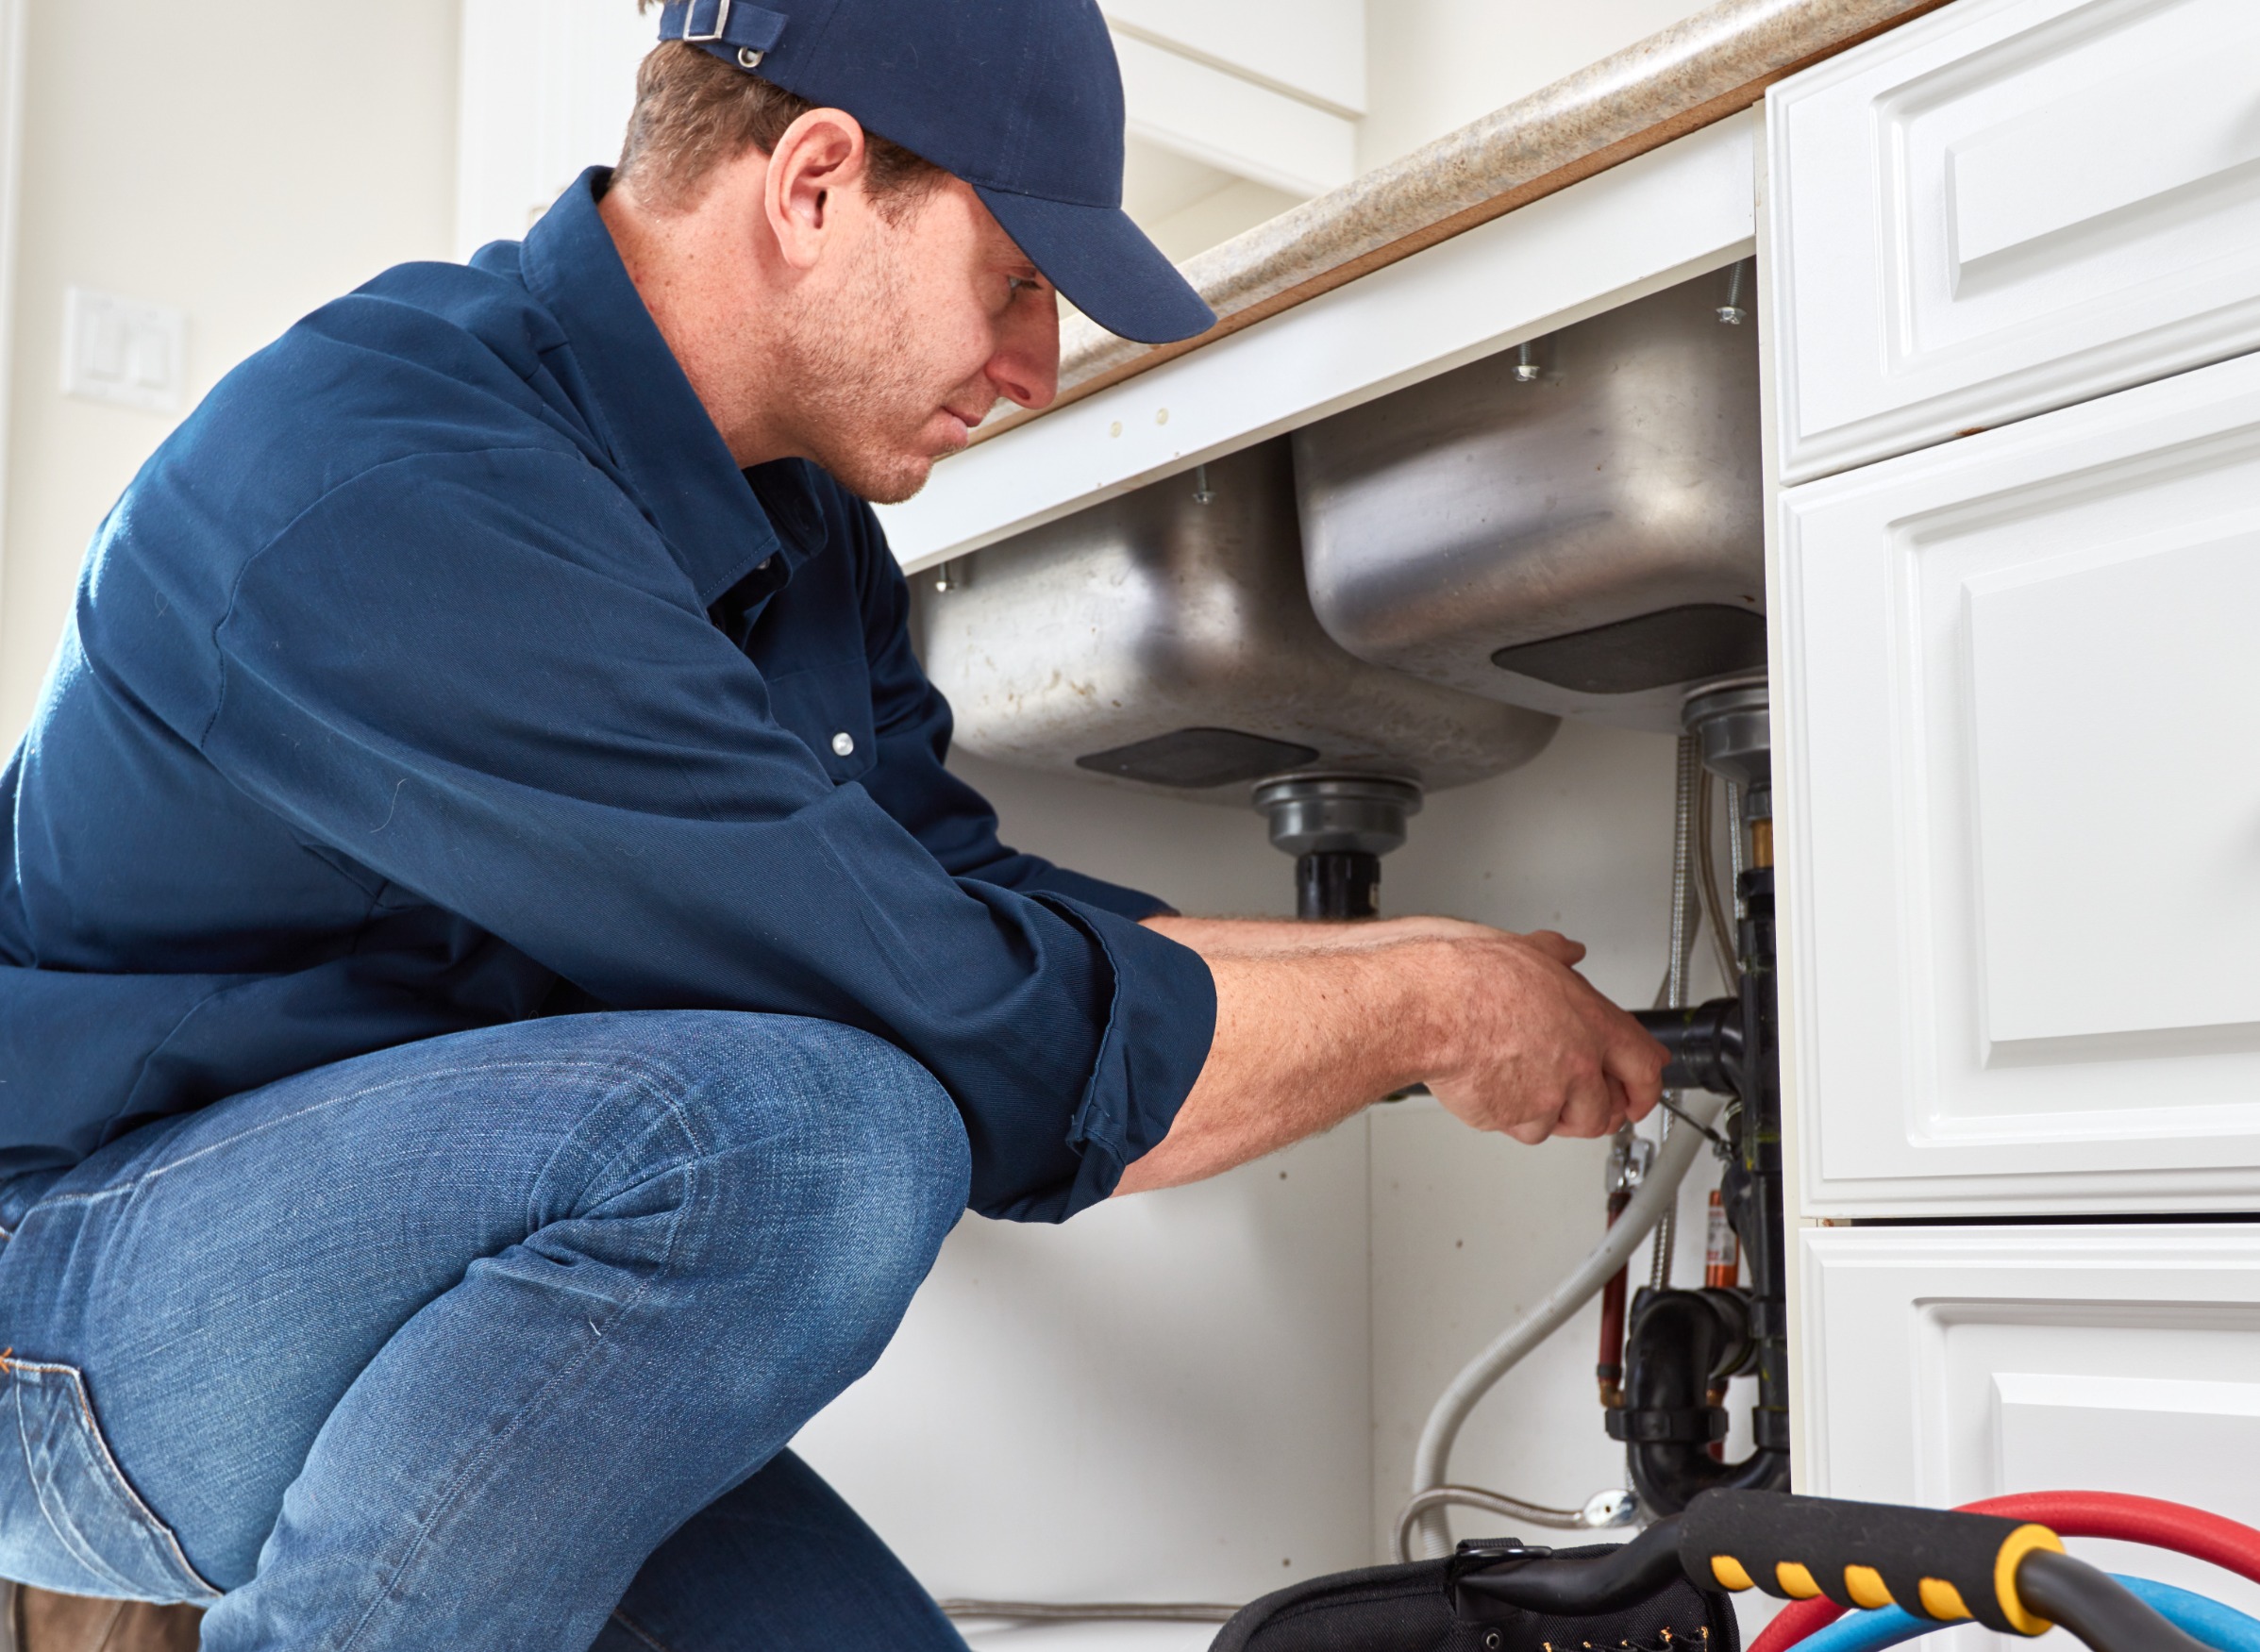 Handyman helps with minor plumbing issue